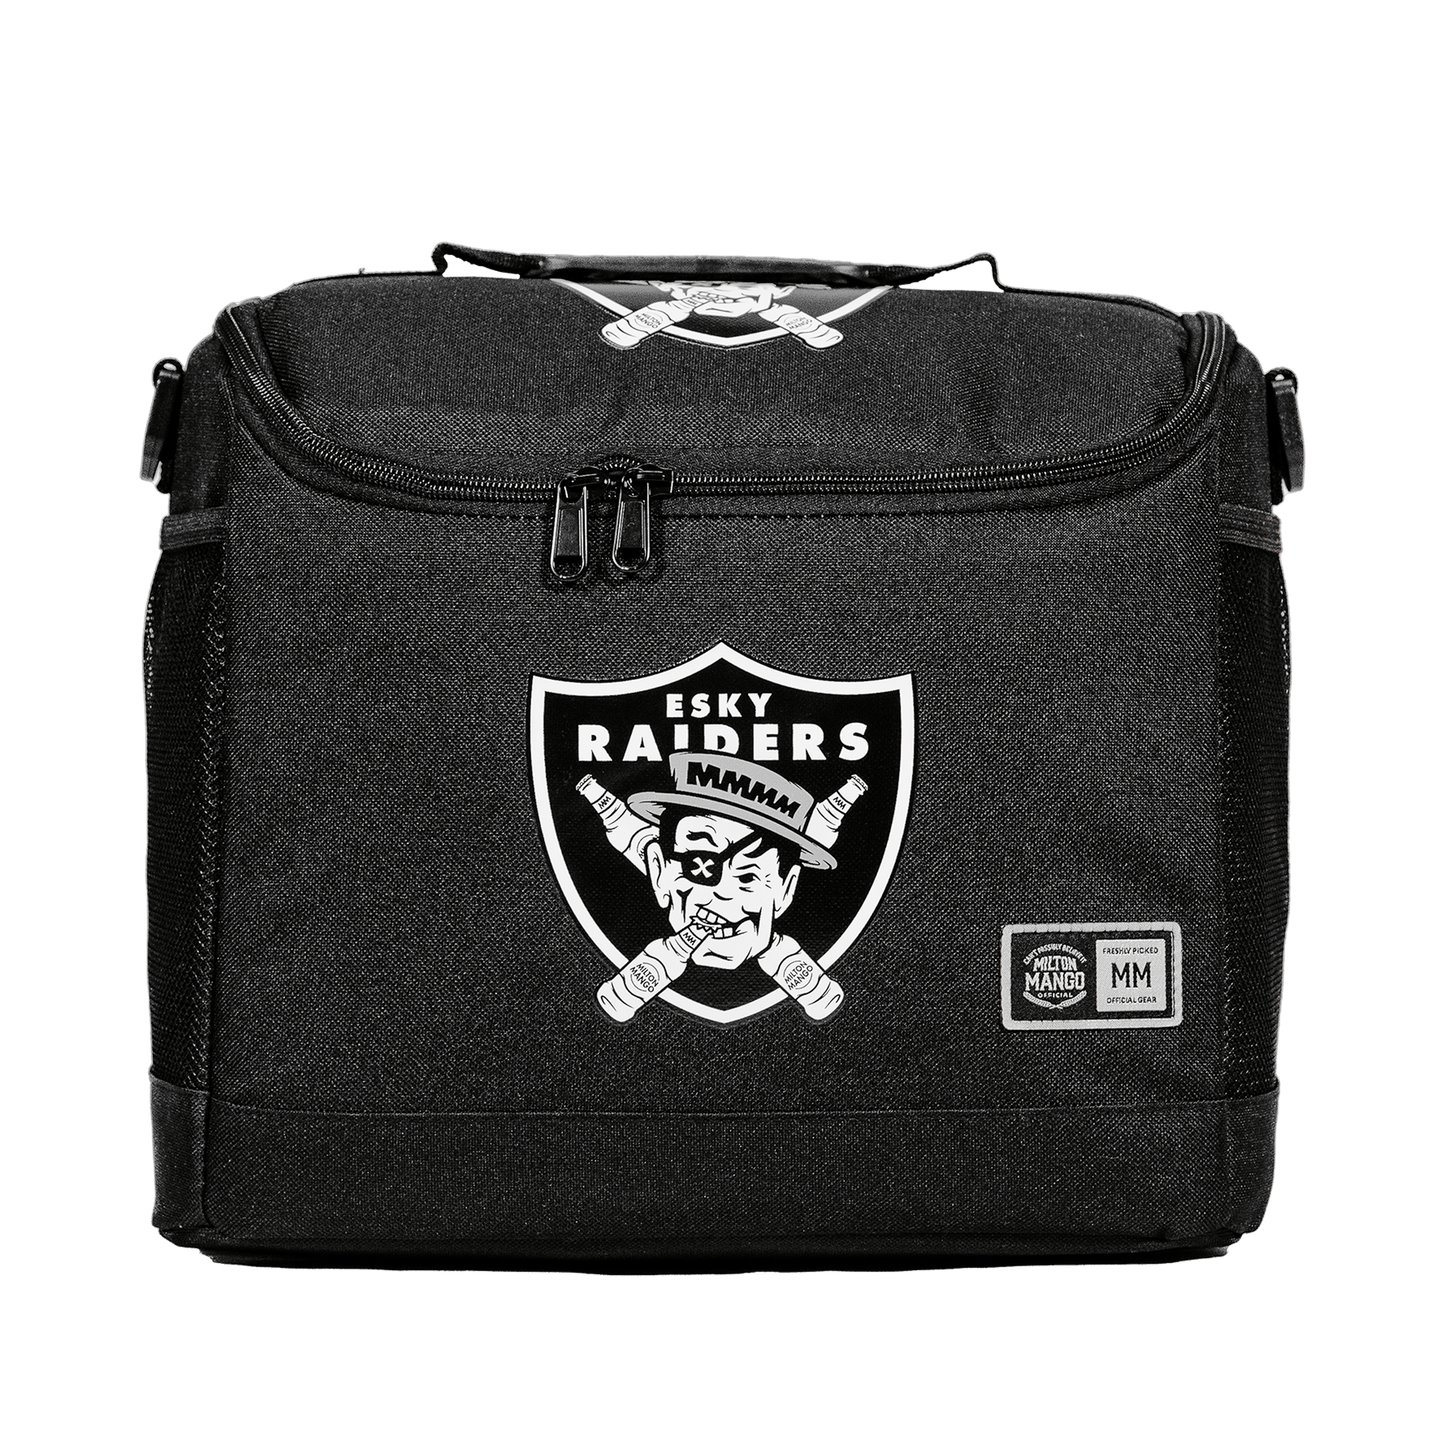 Esky Raiders Cooler Bag Cooler Bag Milton Mango